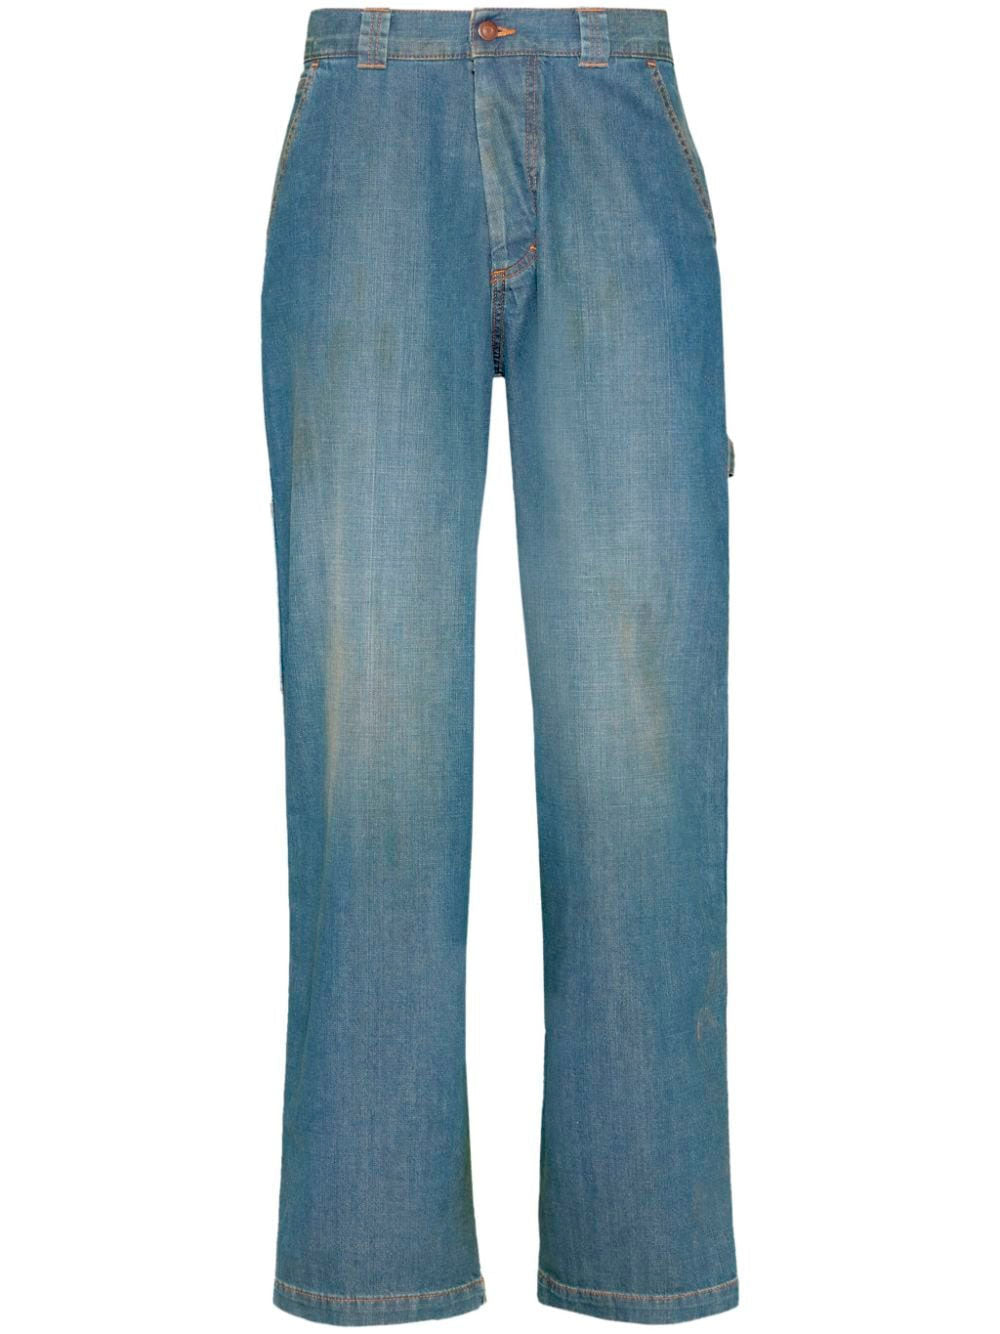 Americana jeans